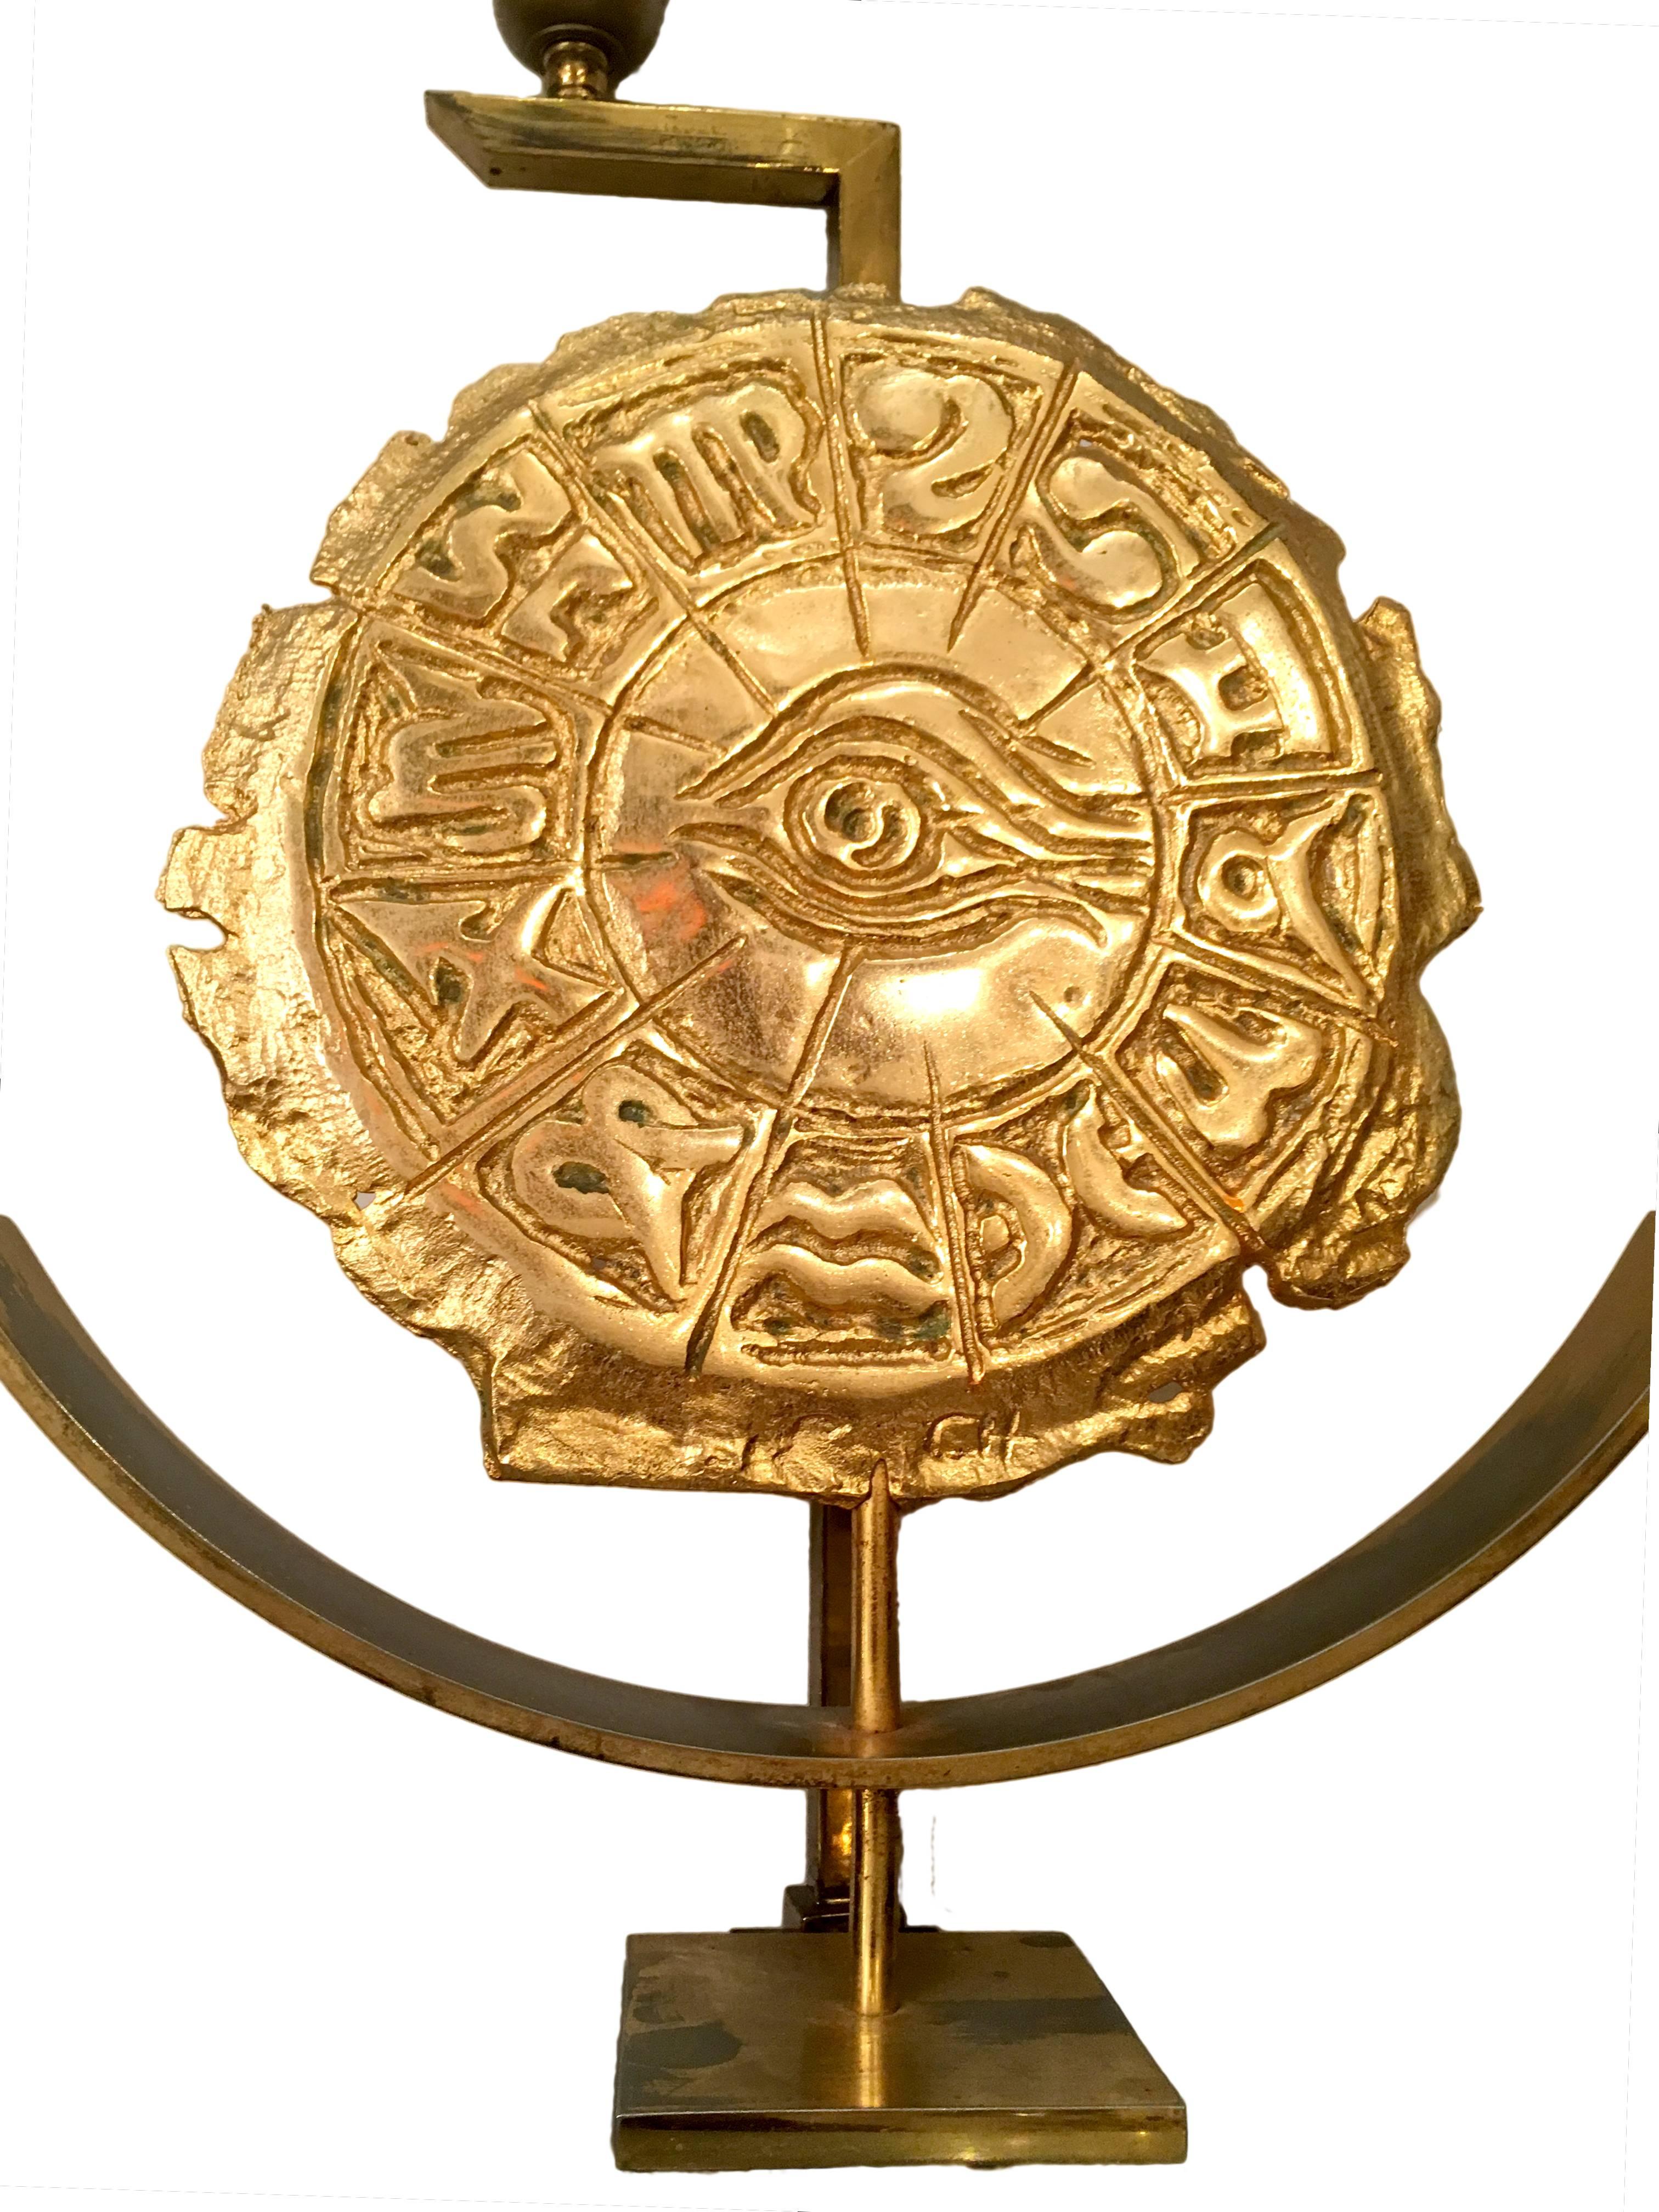 A circa 1960s Italian gilt bronze lamp with zodiac wheel detail.

Measurements:
Height of body: 16